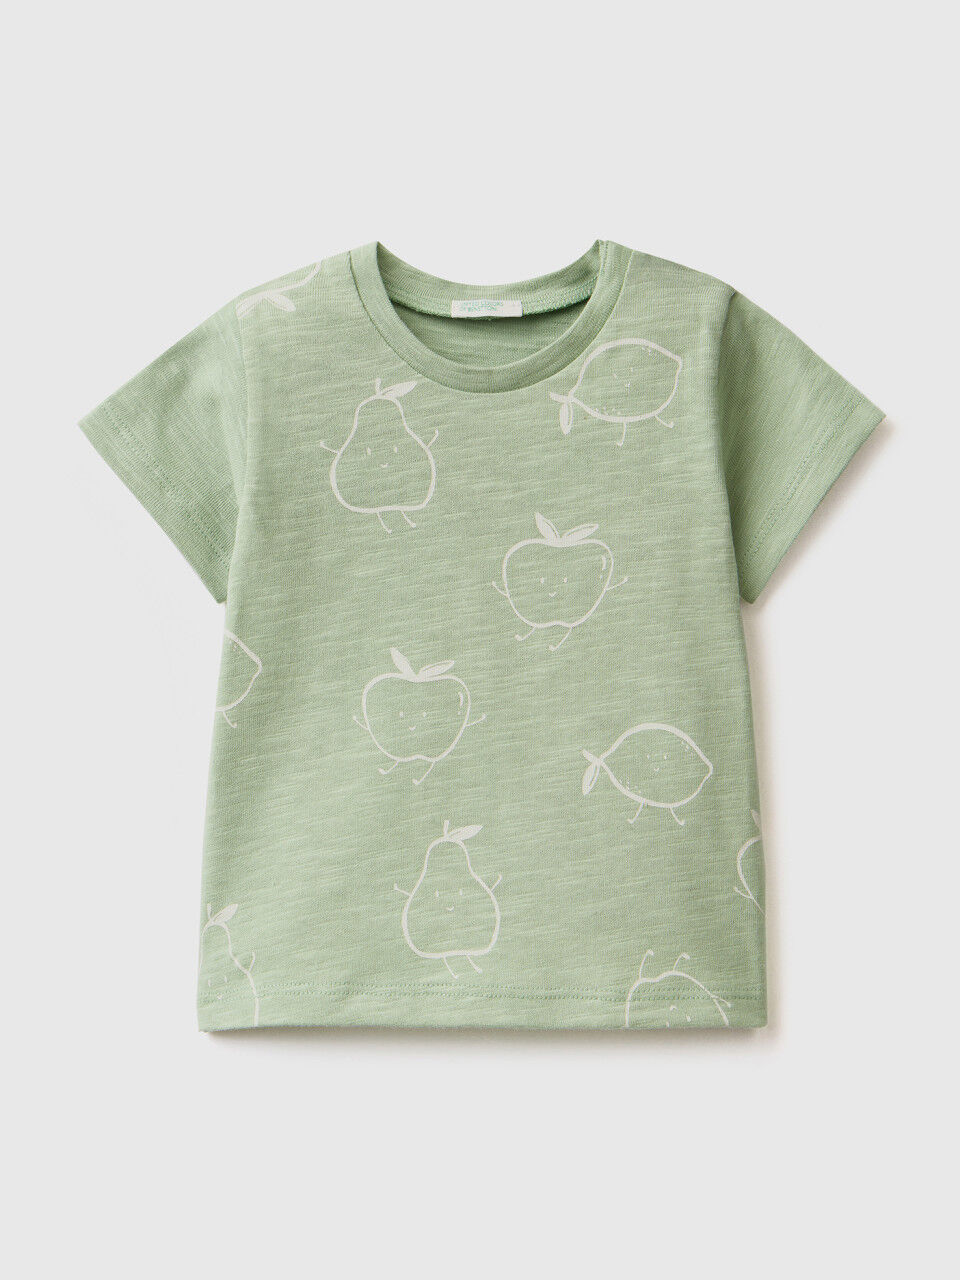 T-Shirt mit Früchteprint